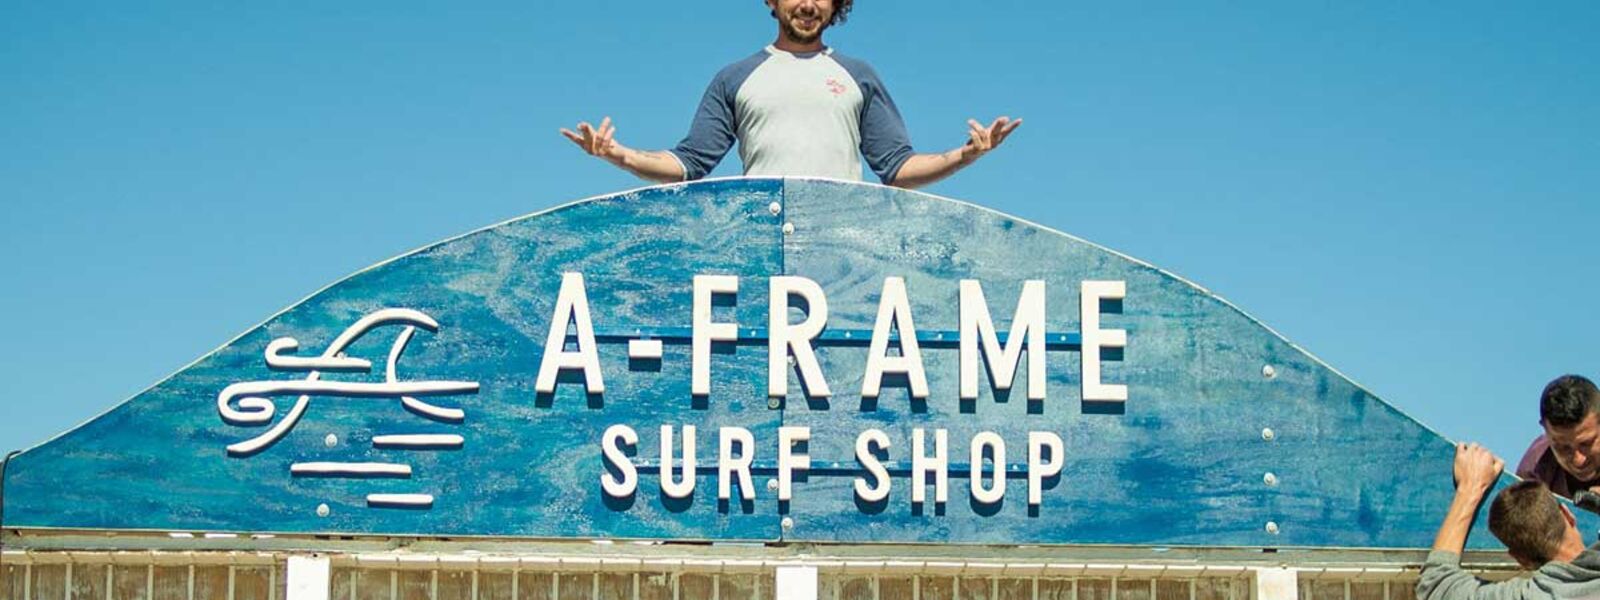 A-Frame Surfshop in El Palmar